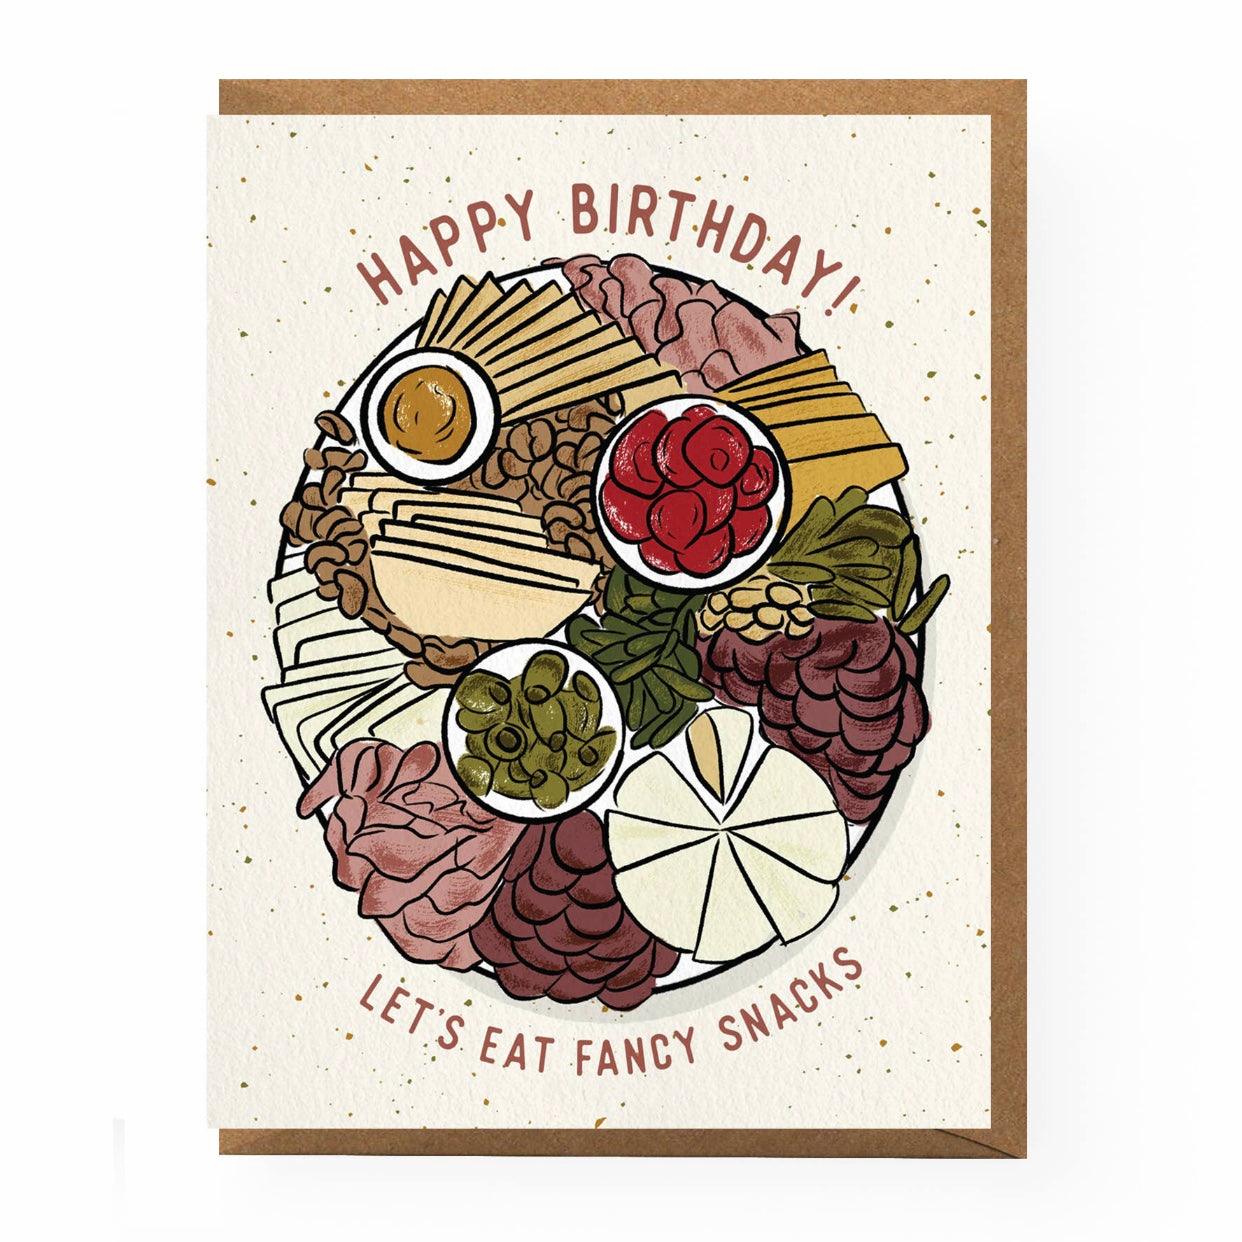 Happy Birthday let's eat fancy snacks greeting card